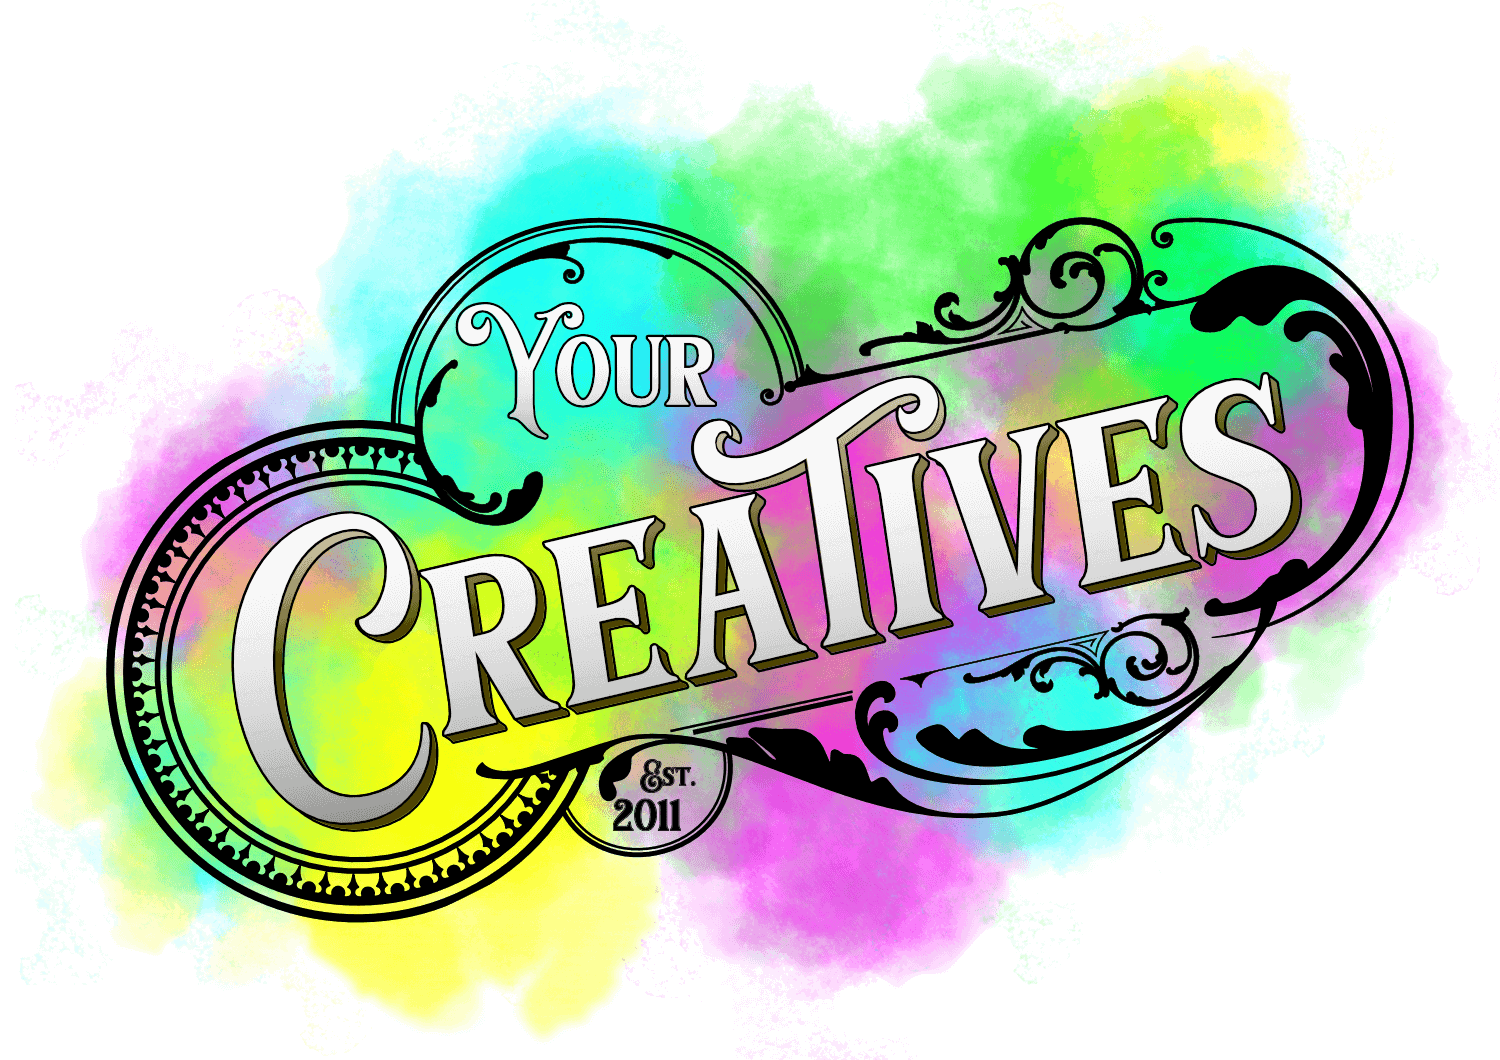 Your Creatives Inc